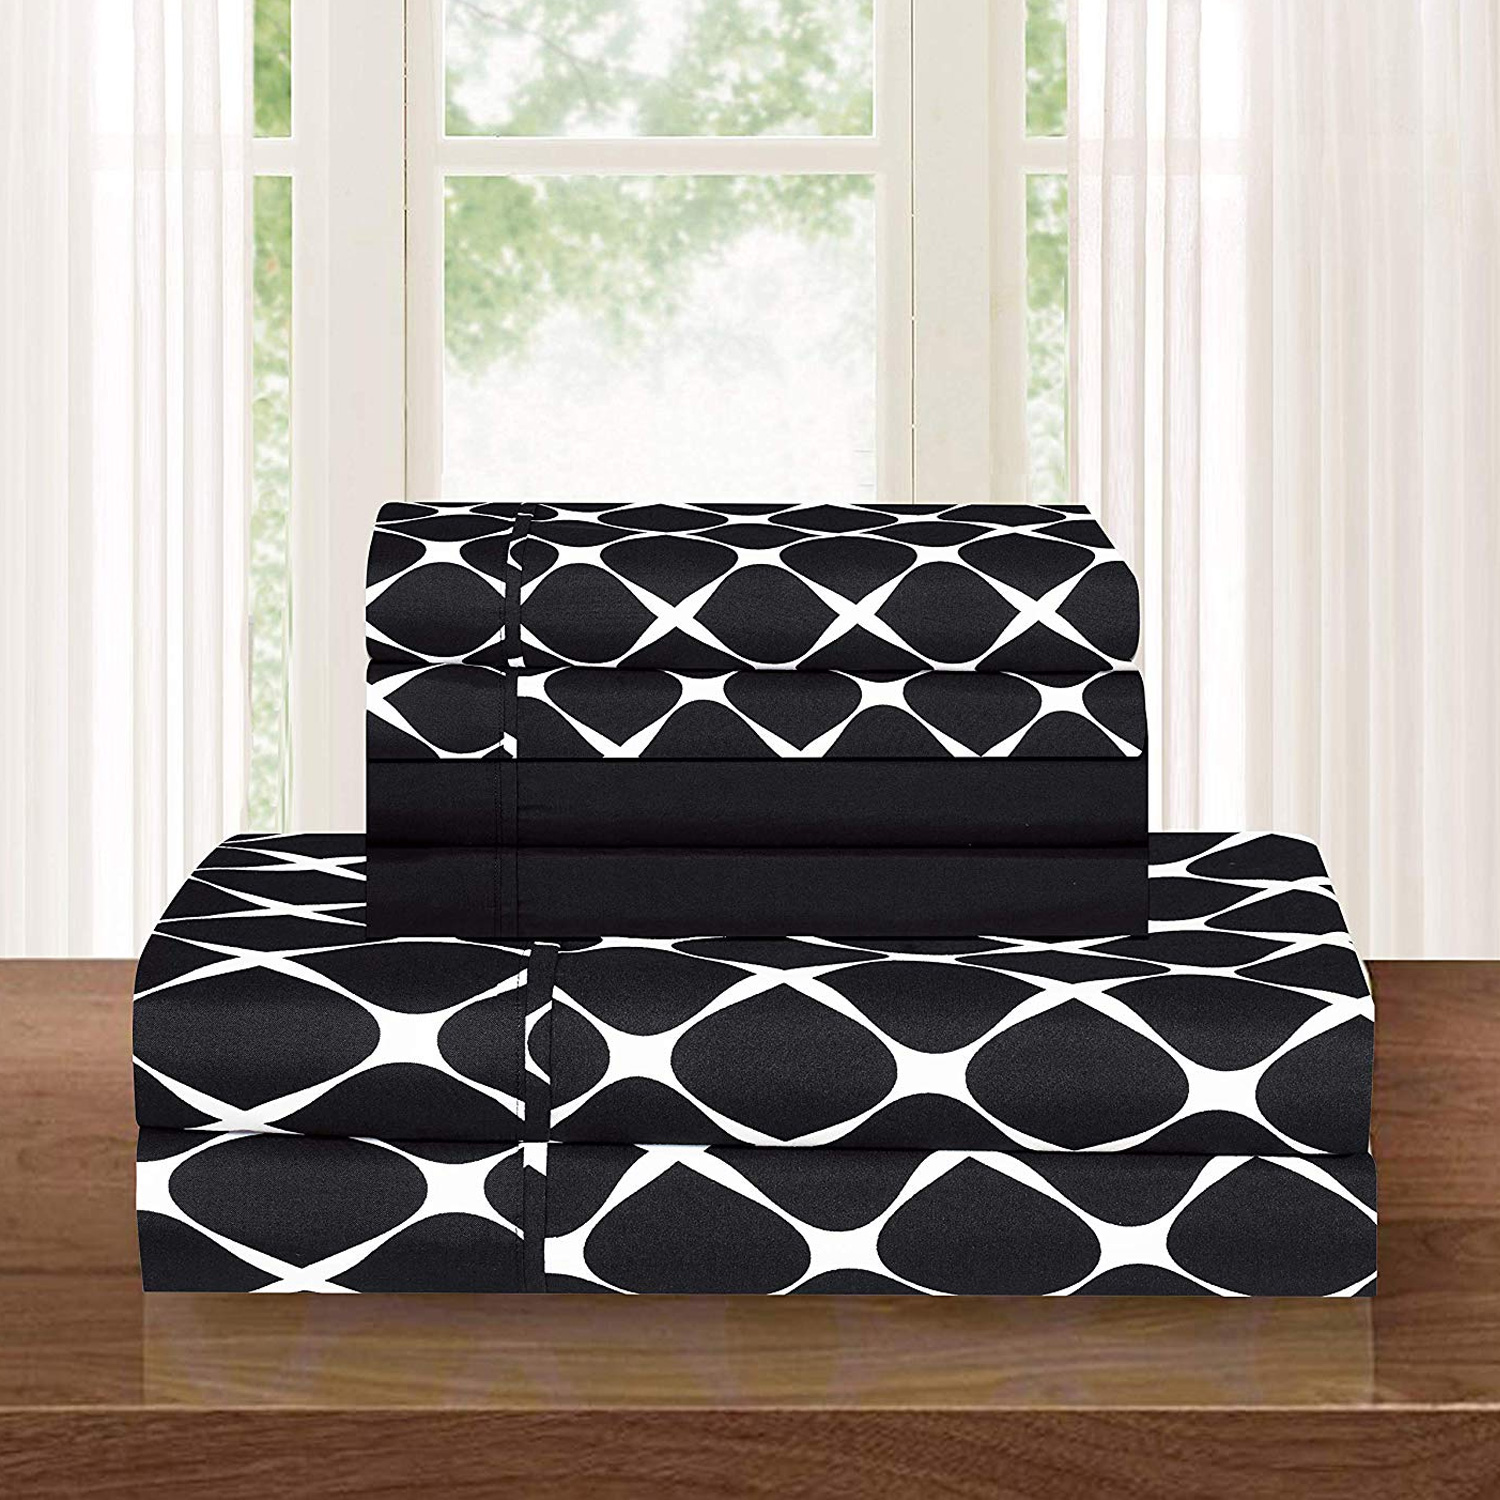 6 Piece Sheet Wrinkle Resistant Milano Trellis Pattern Bedding Set